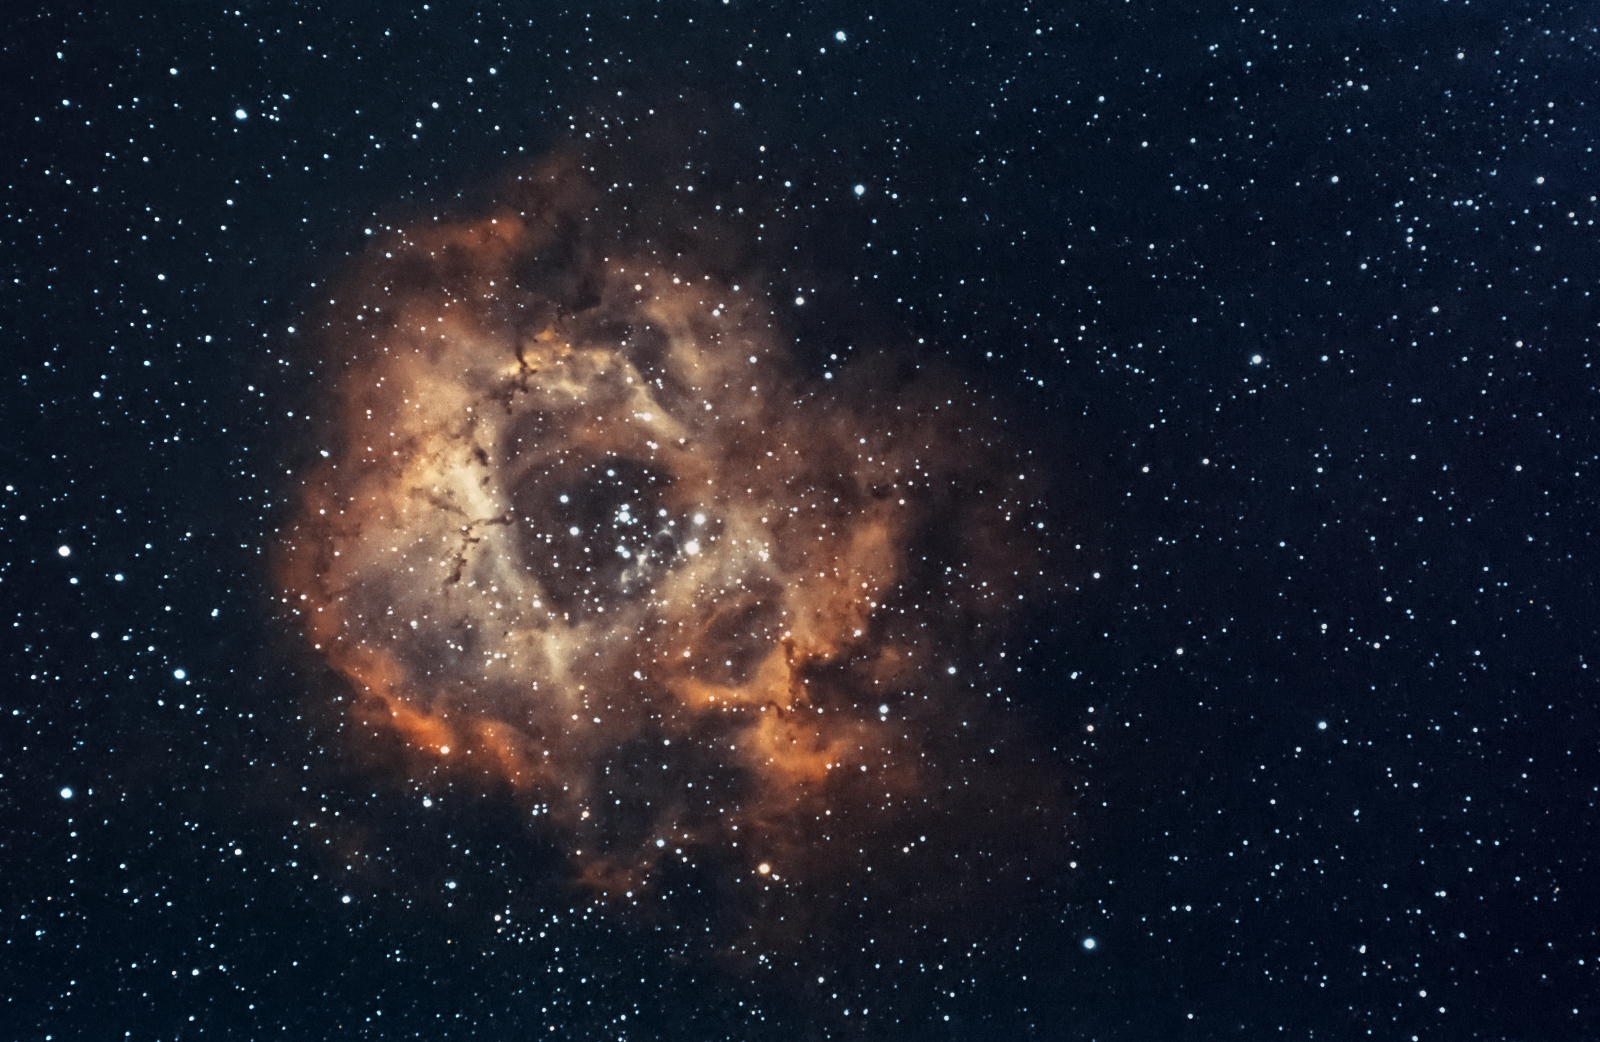 Rosette nebula - HOO